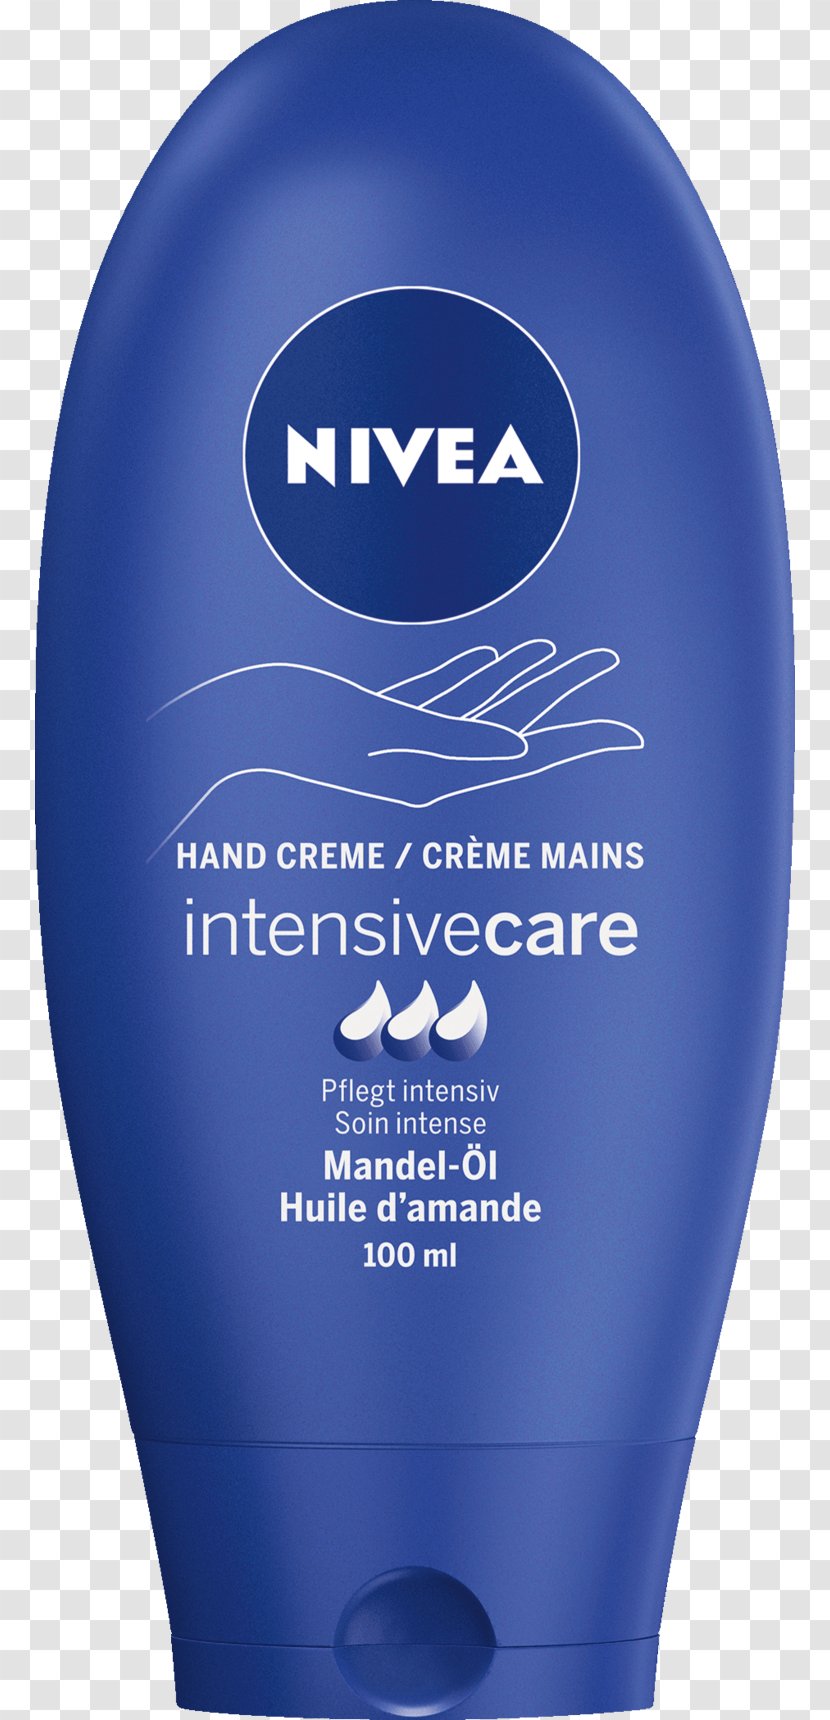 NIVEA Nourishing Body Lotion Cream Florena Shower Gel - Manicure - Intensive Care Unit Transparent PNG